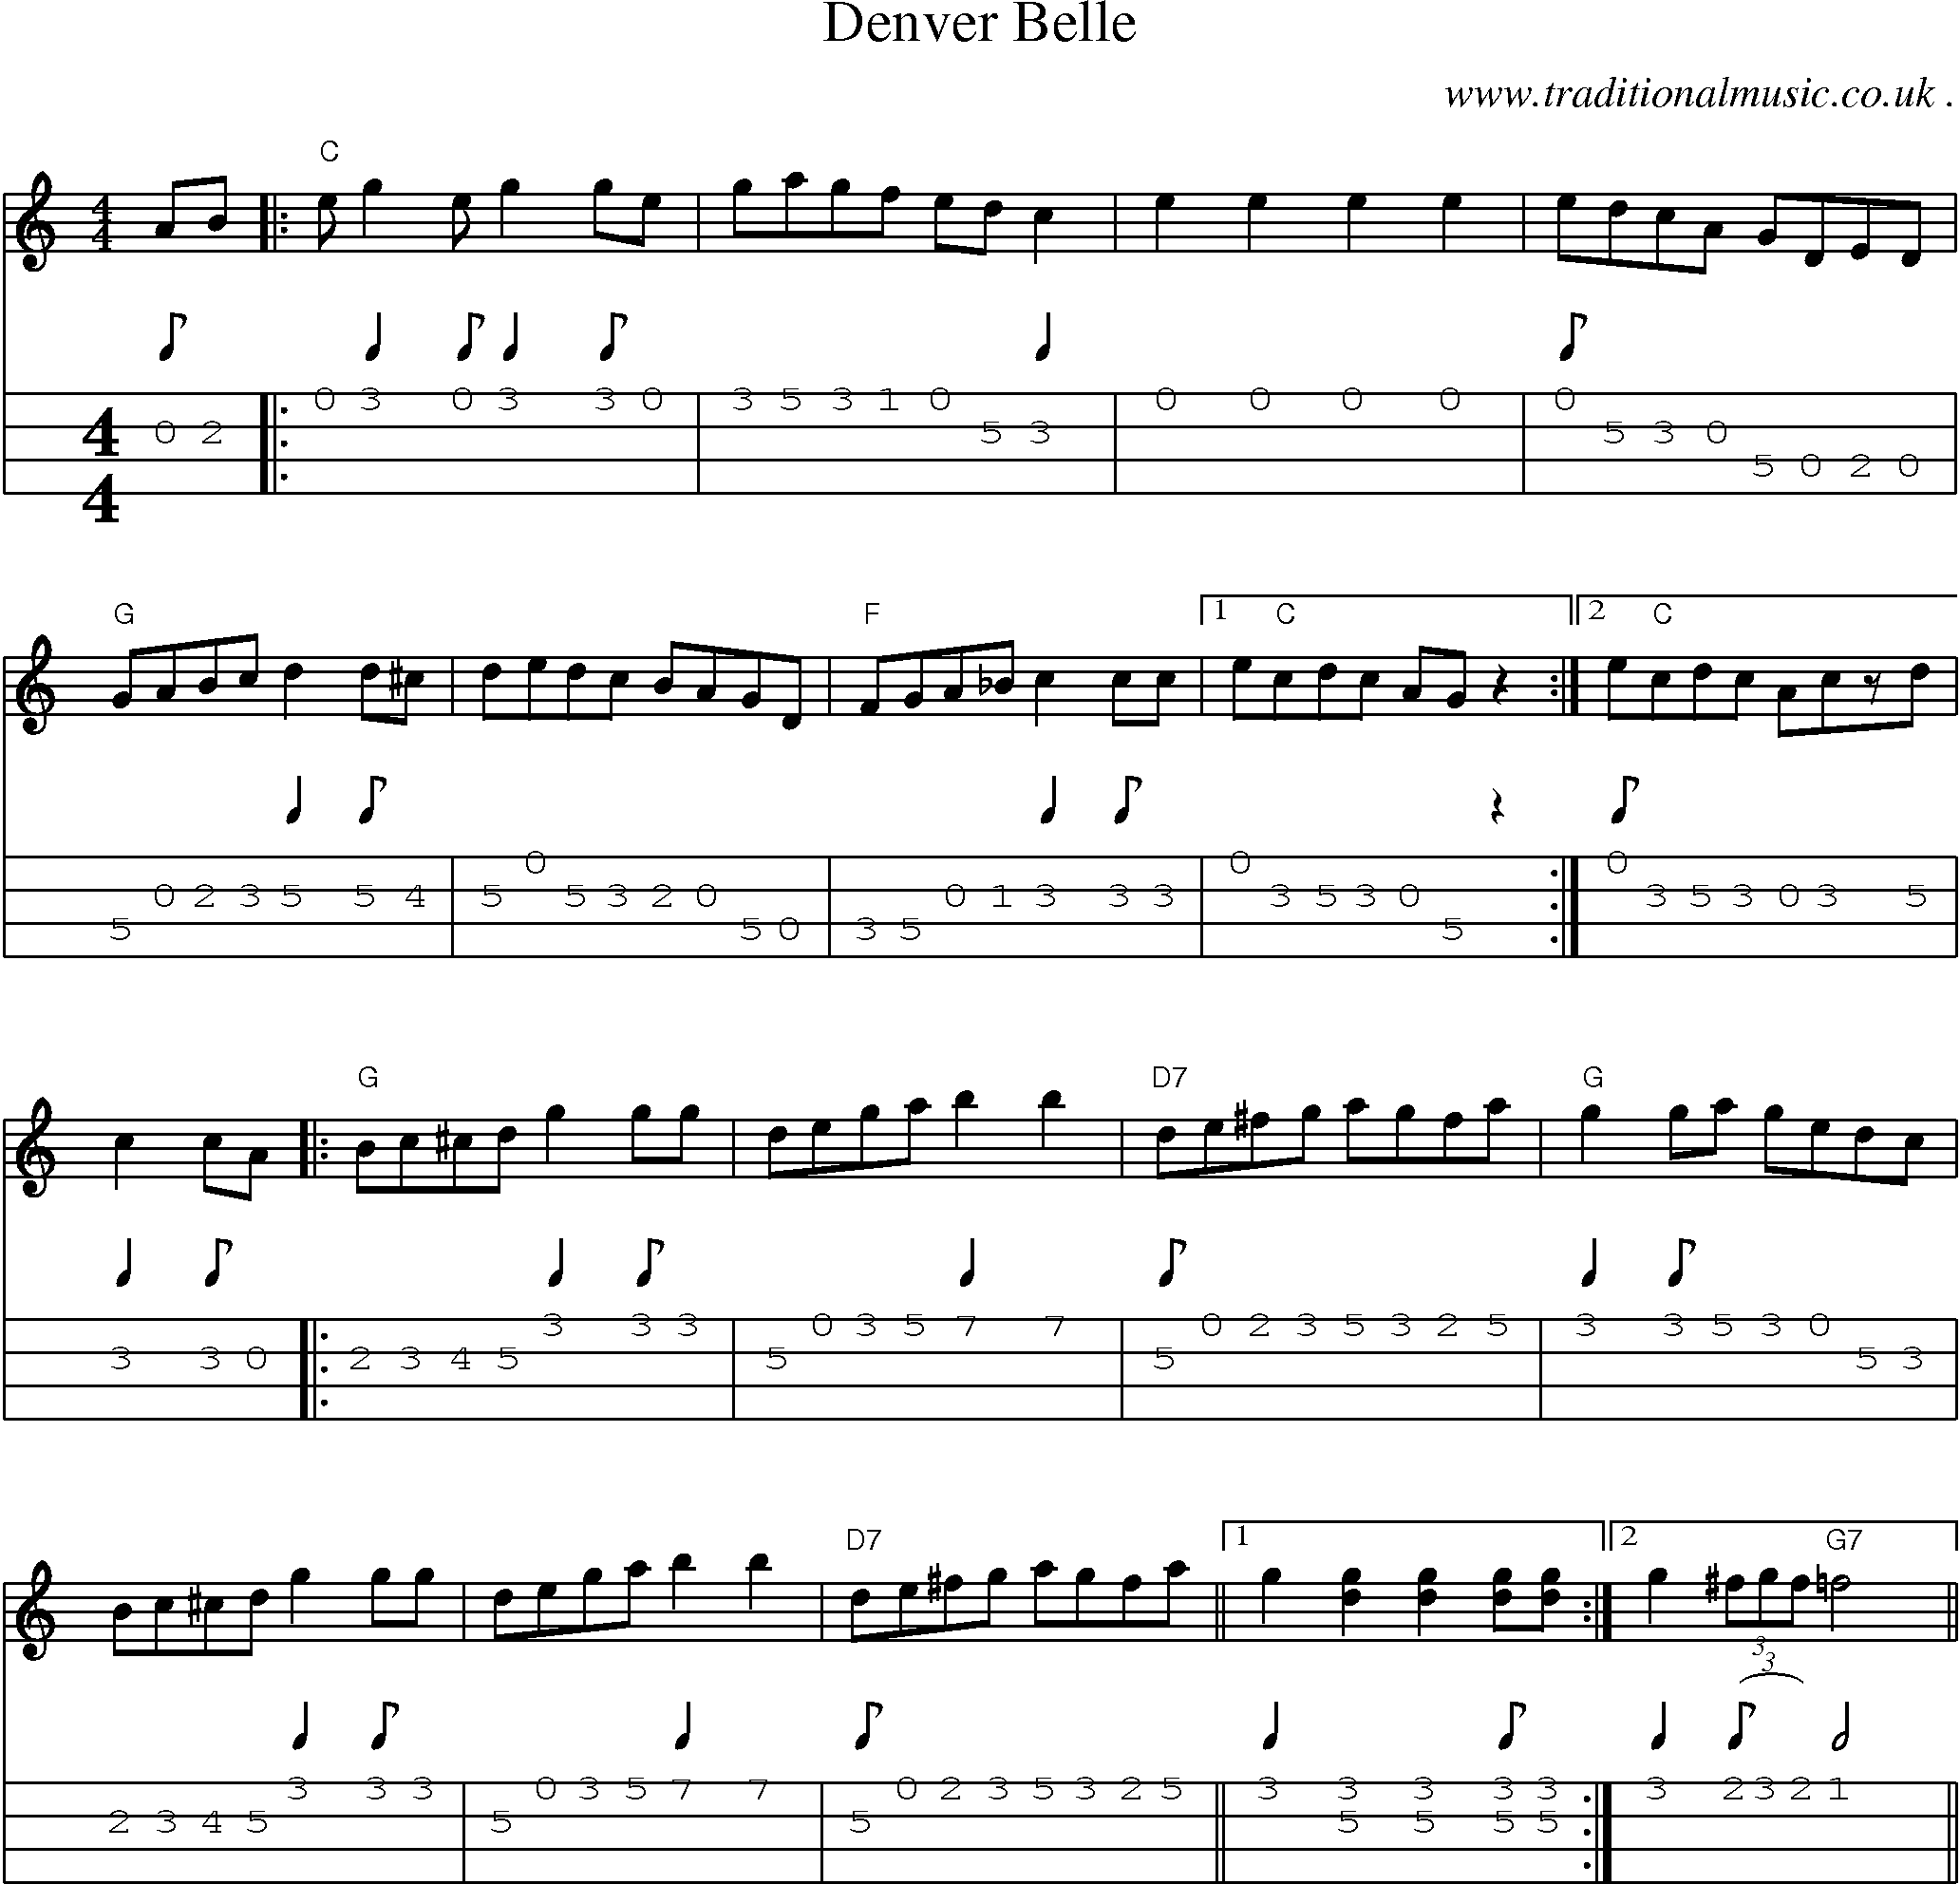 Music Score and Mandolin Tabs for Denver Belle